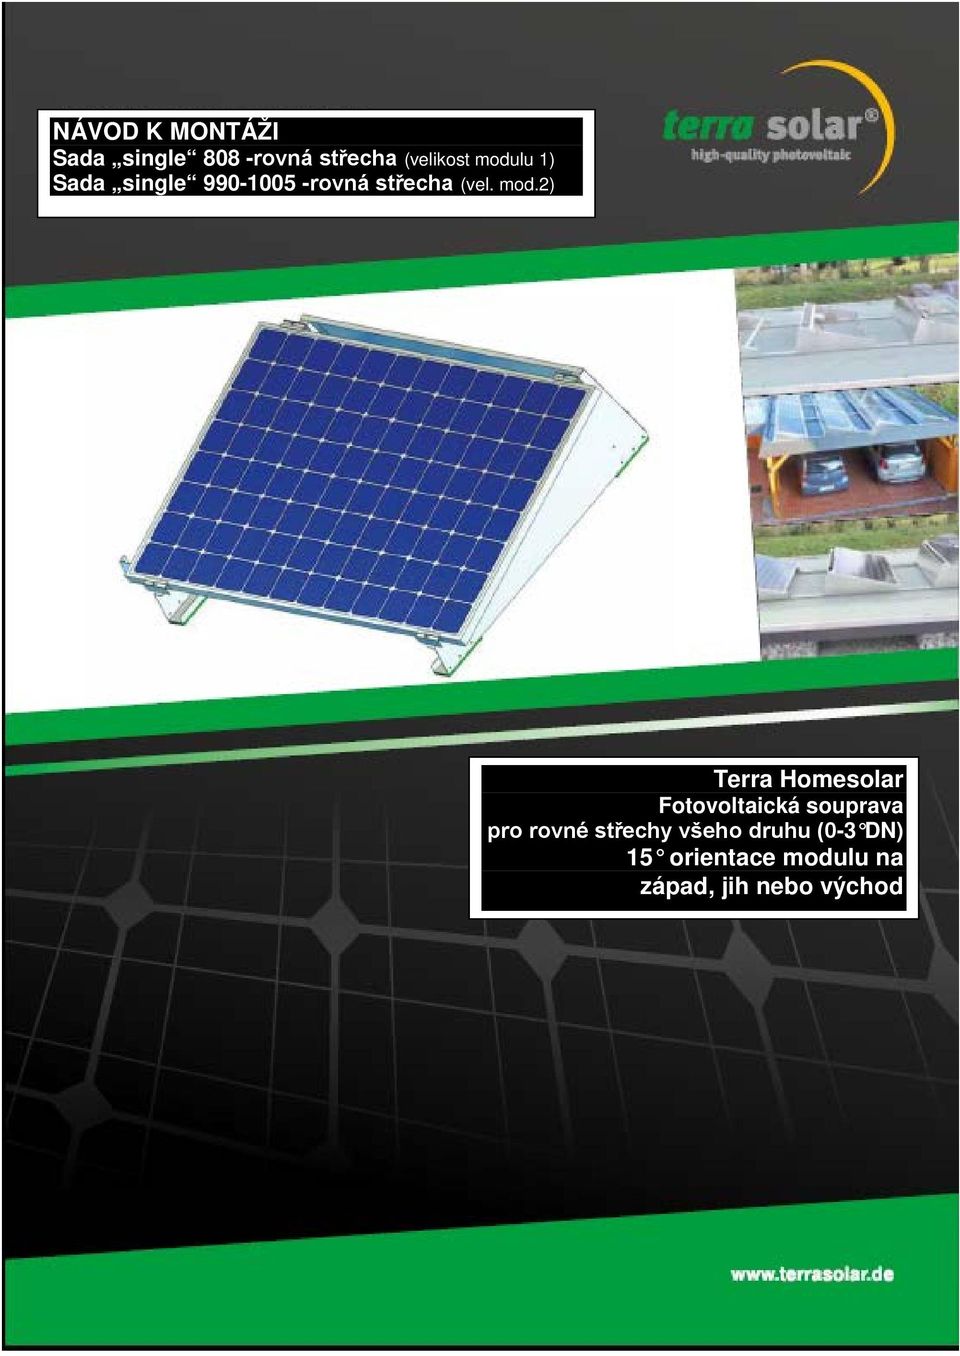 2) Terra Homesolar Fotovoltaická souprava pro rovné střechy